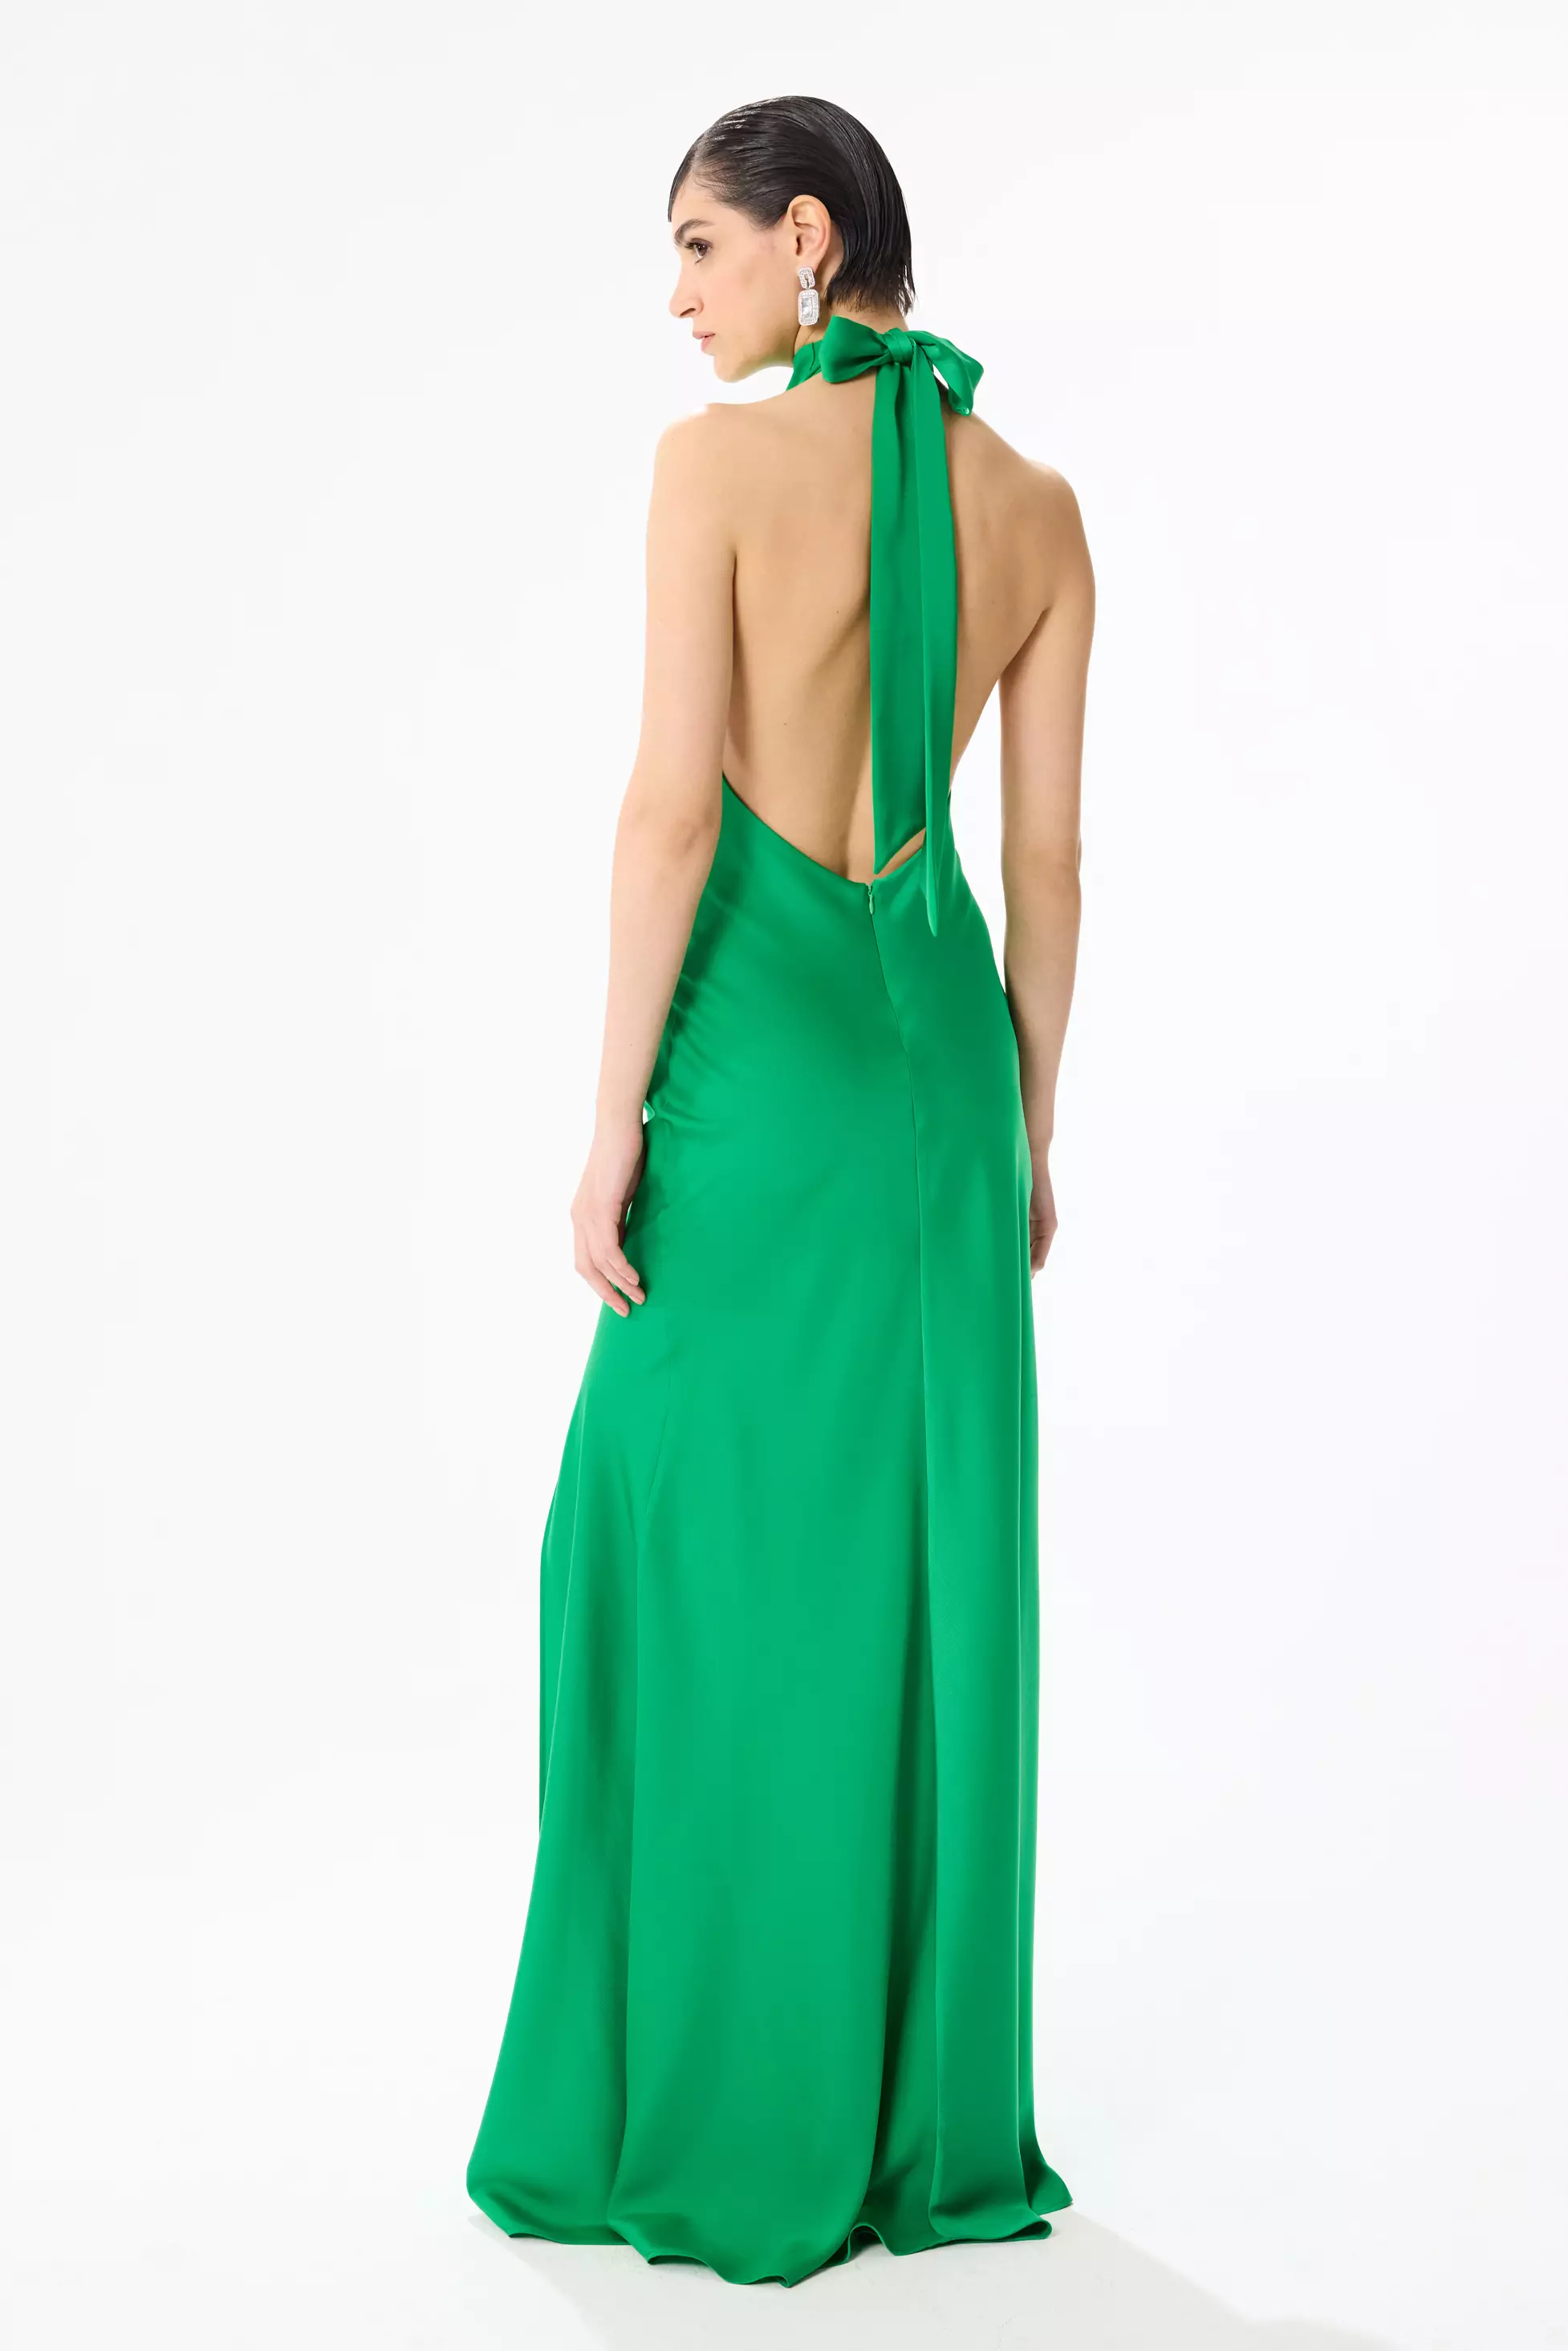 Green satin sleeveless long dress